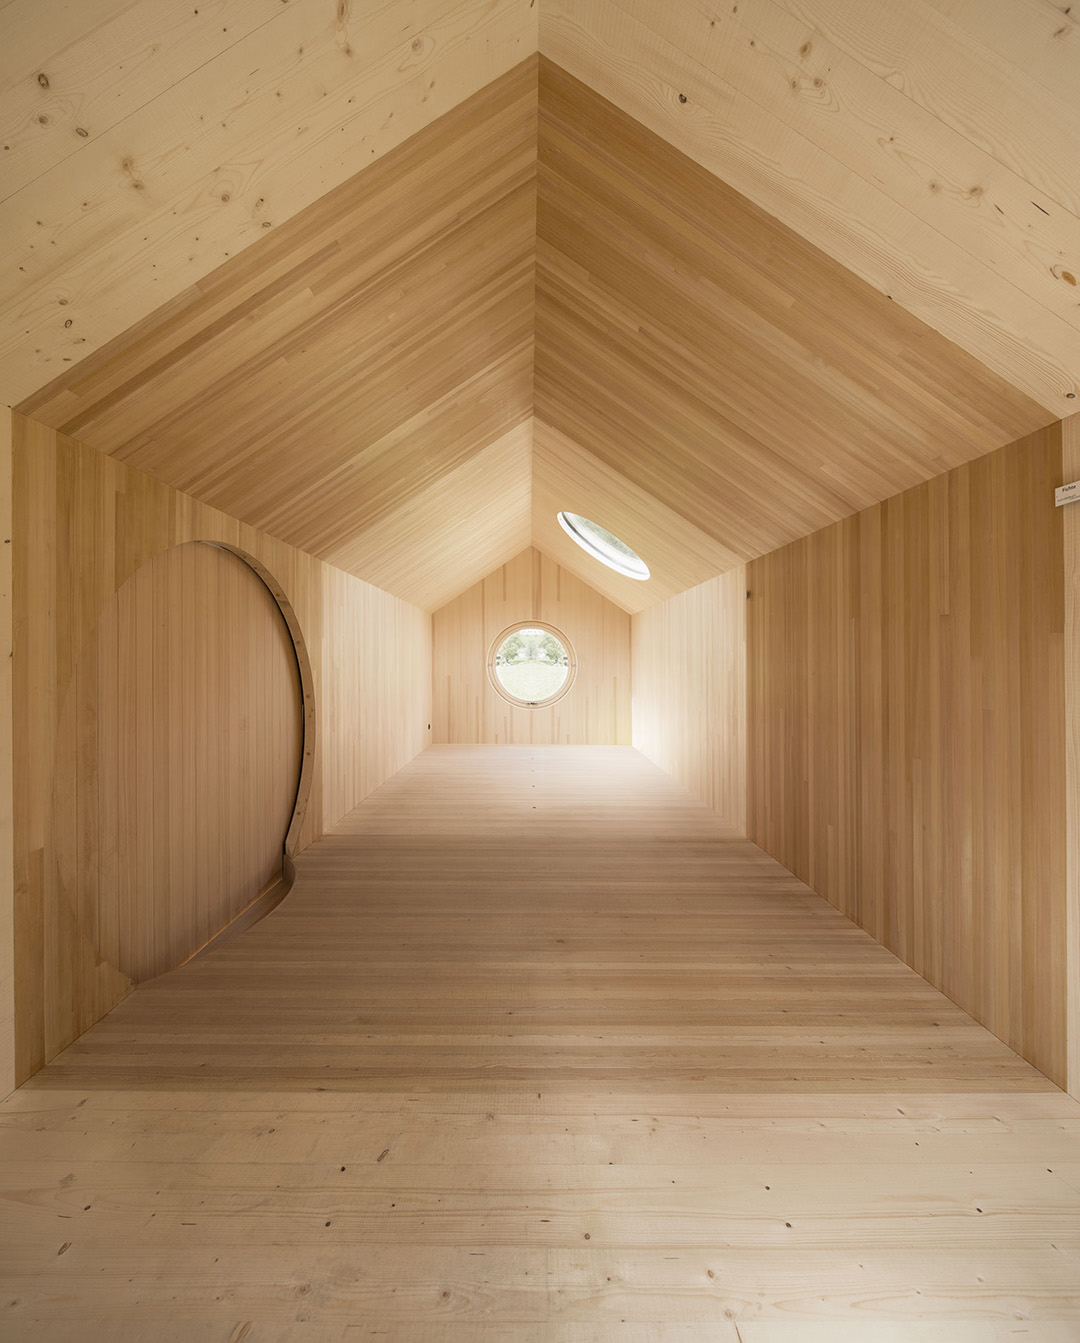 Internal wooden pavilion